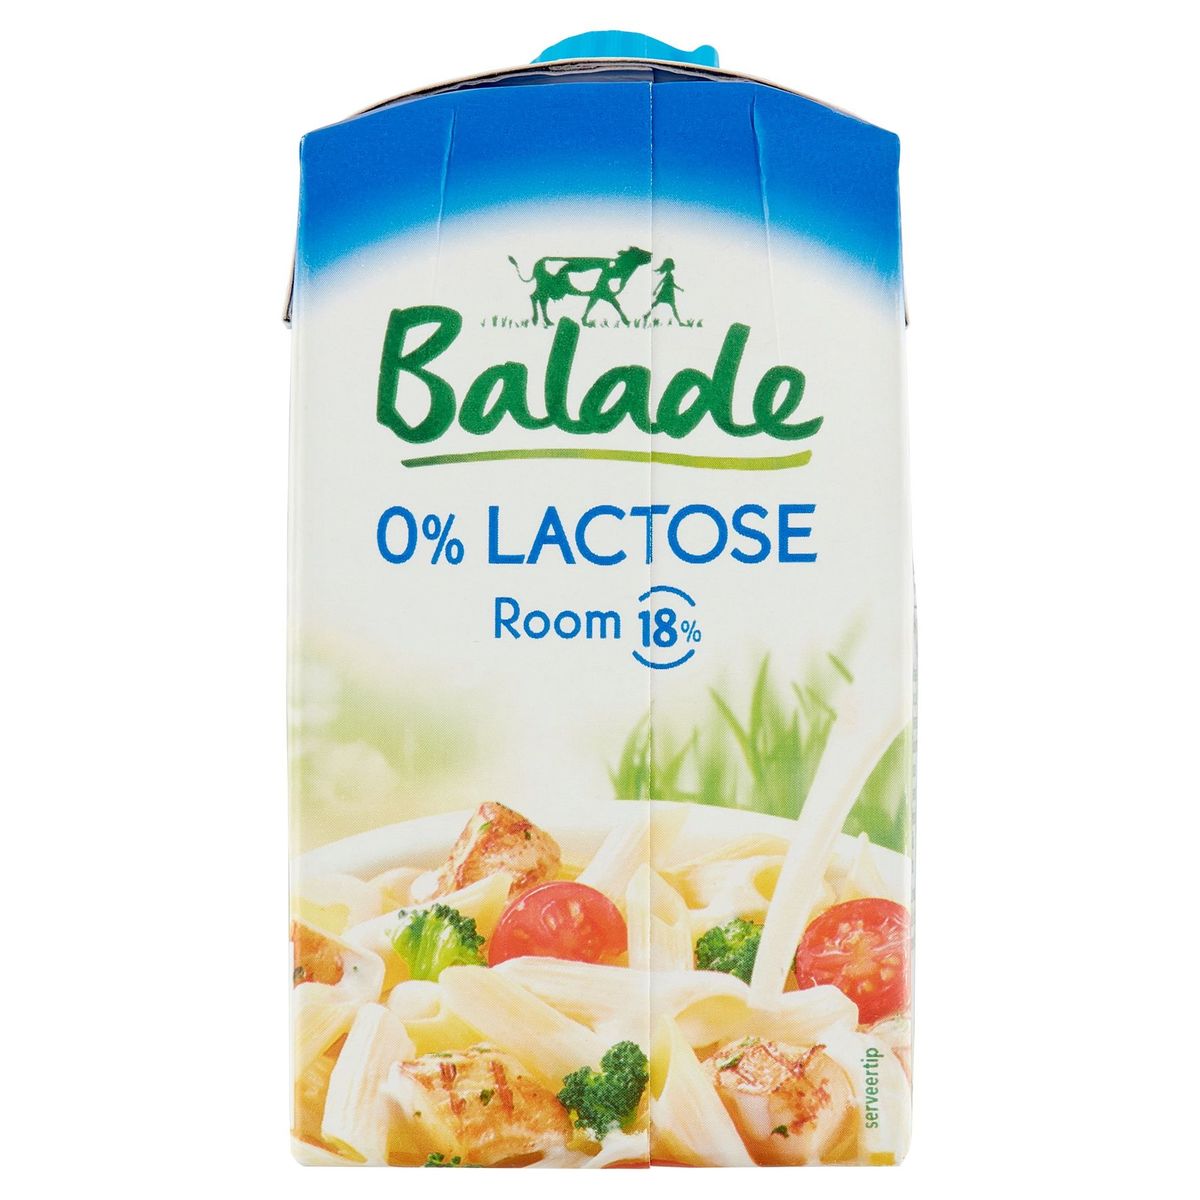 Balade 0% Lactose Room 18% 25 cl